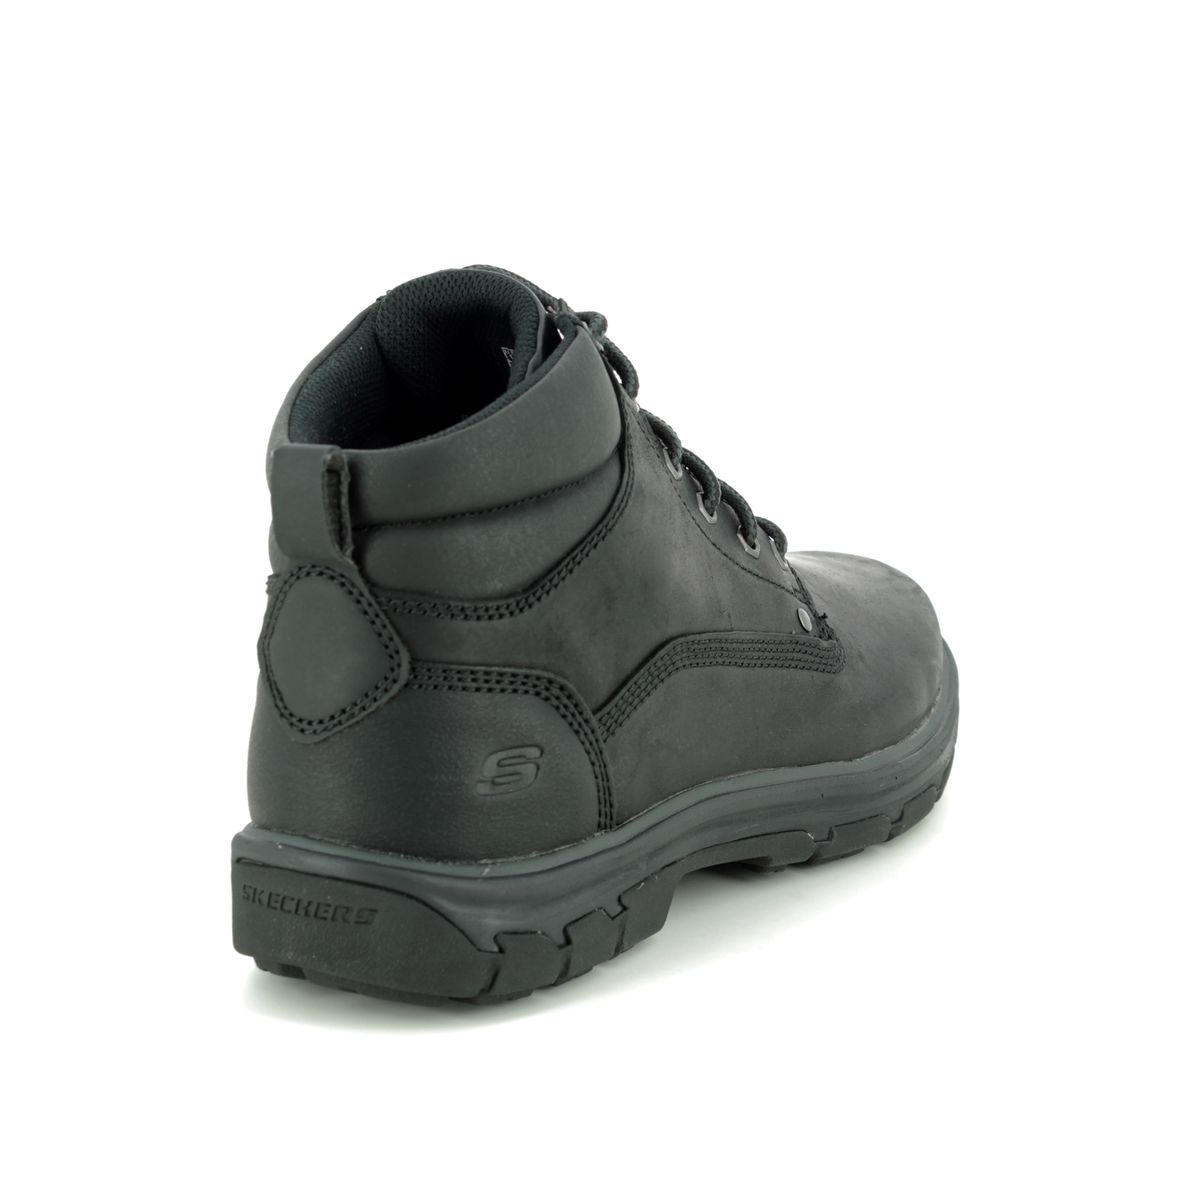 black sketcher boots